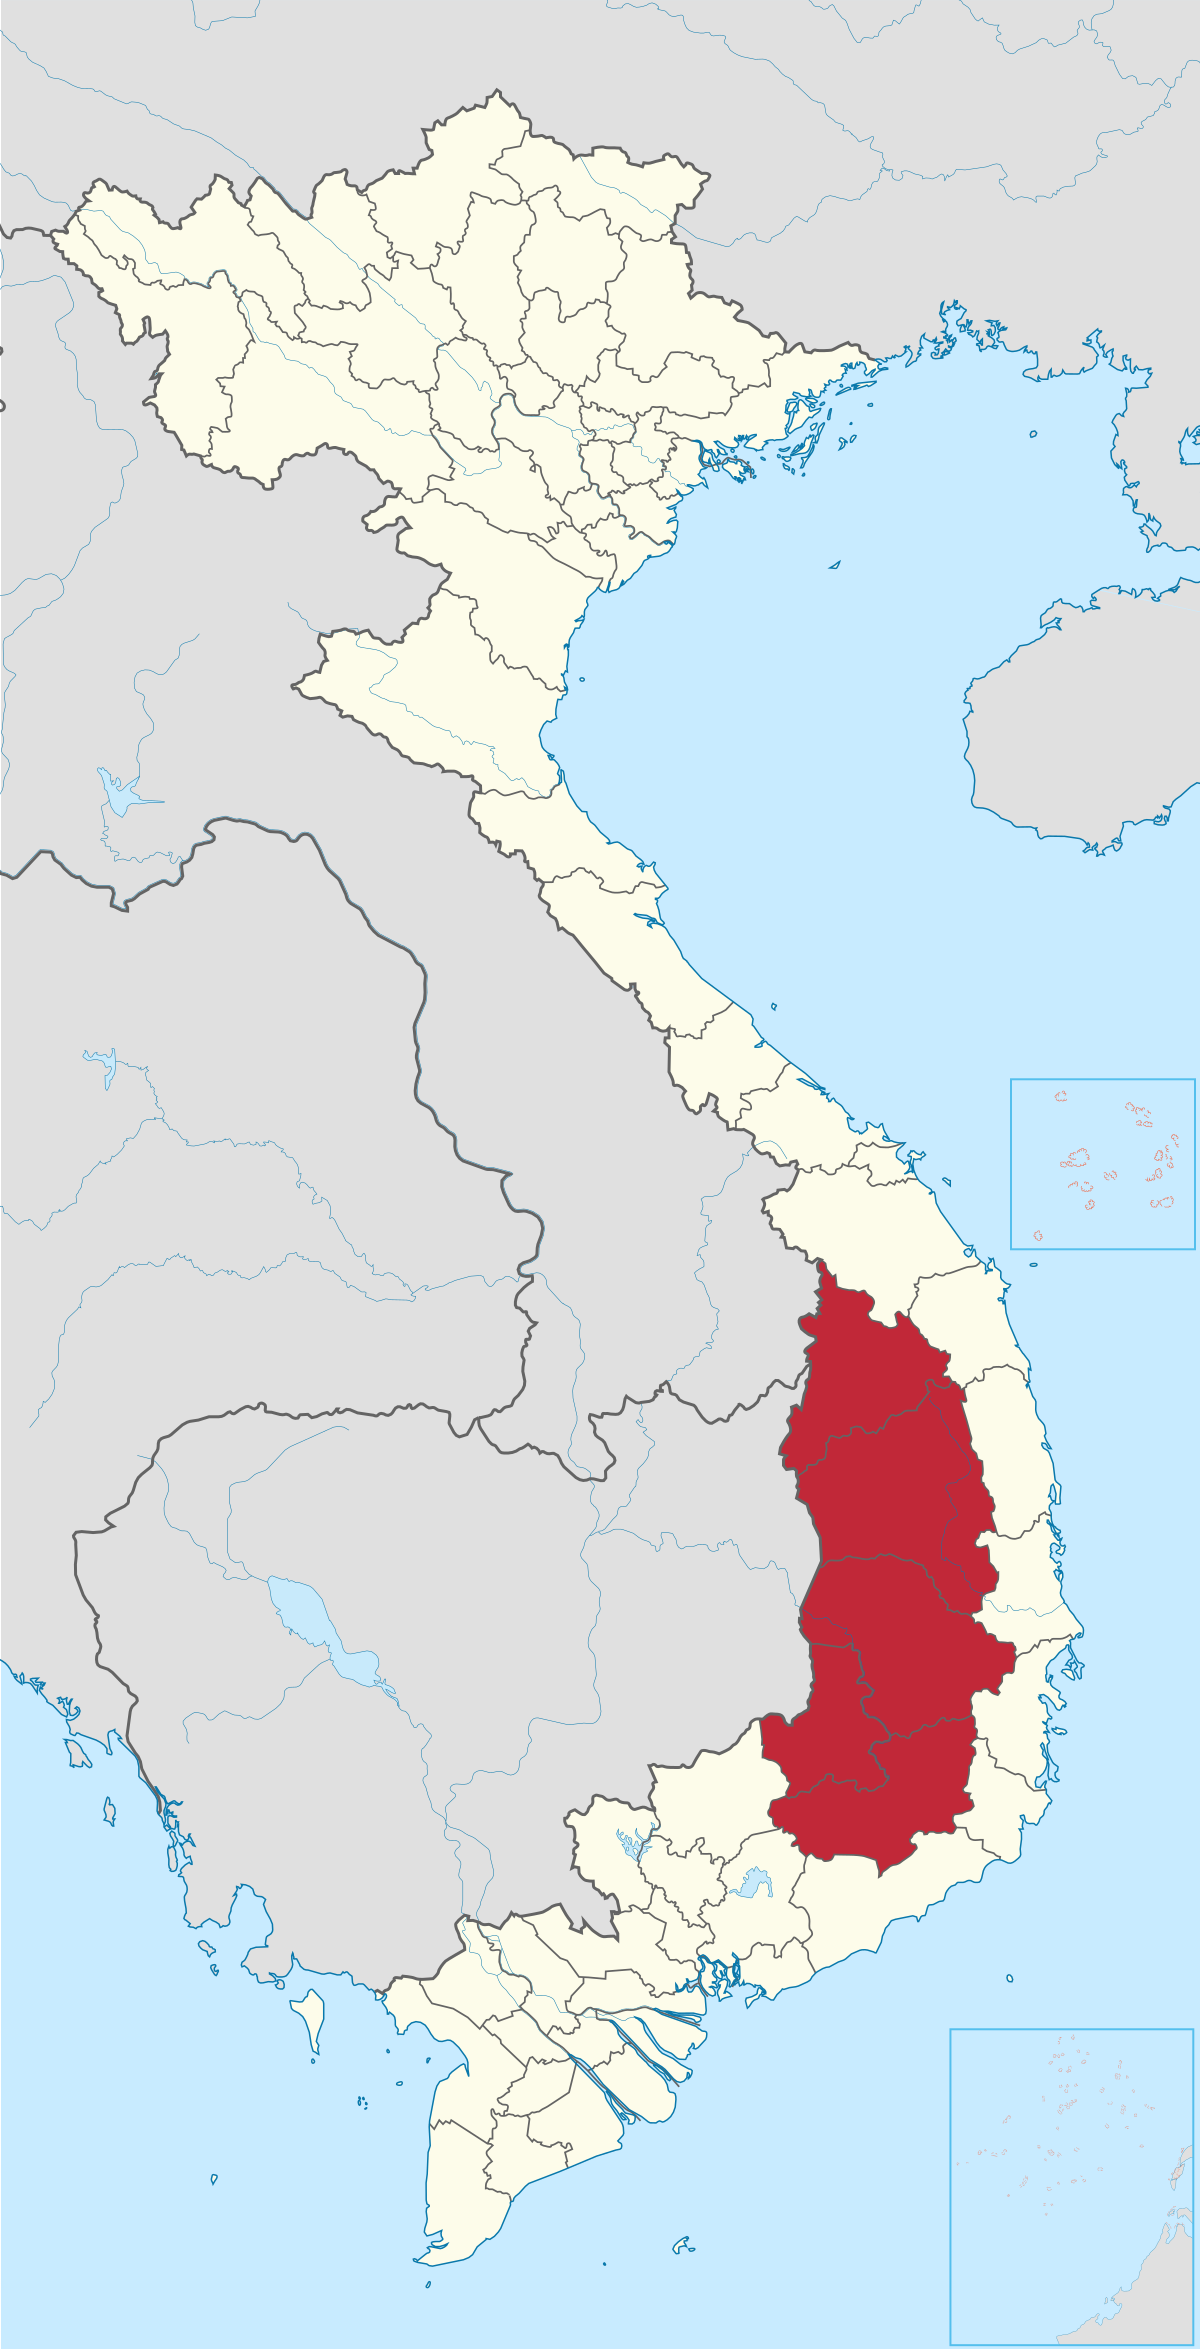 Vietnam - Wikipedia